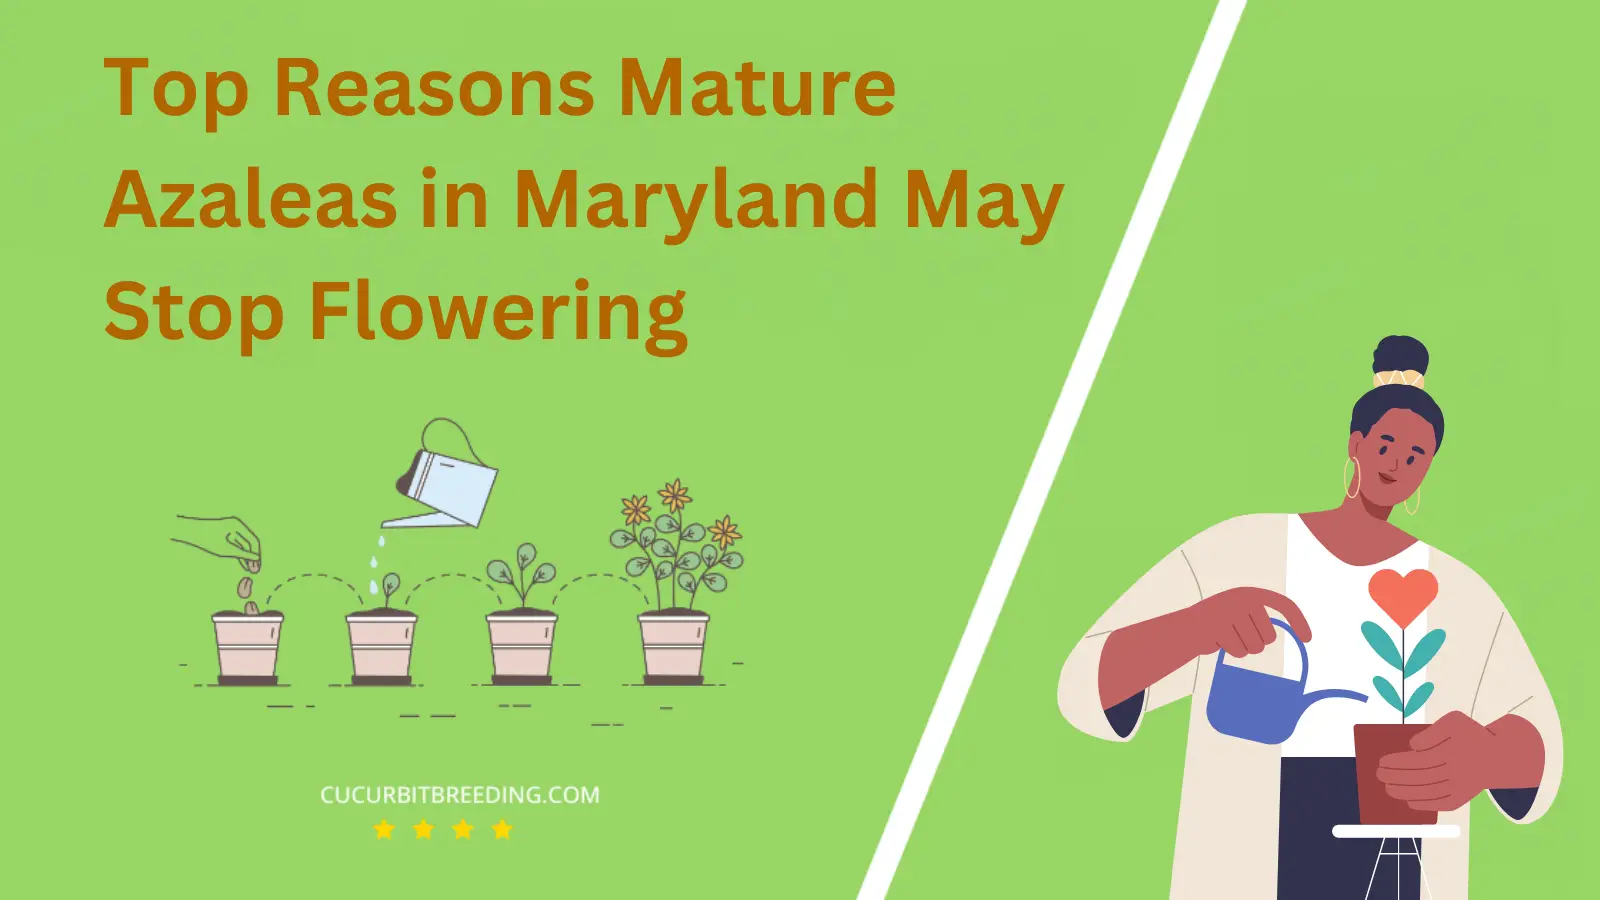 Top Reasons Mature Azaleas in Maryland May Stop Flowering